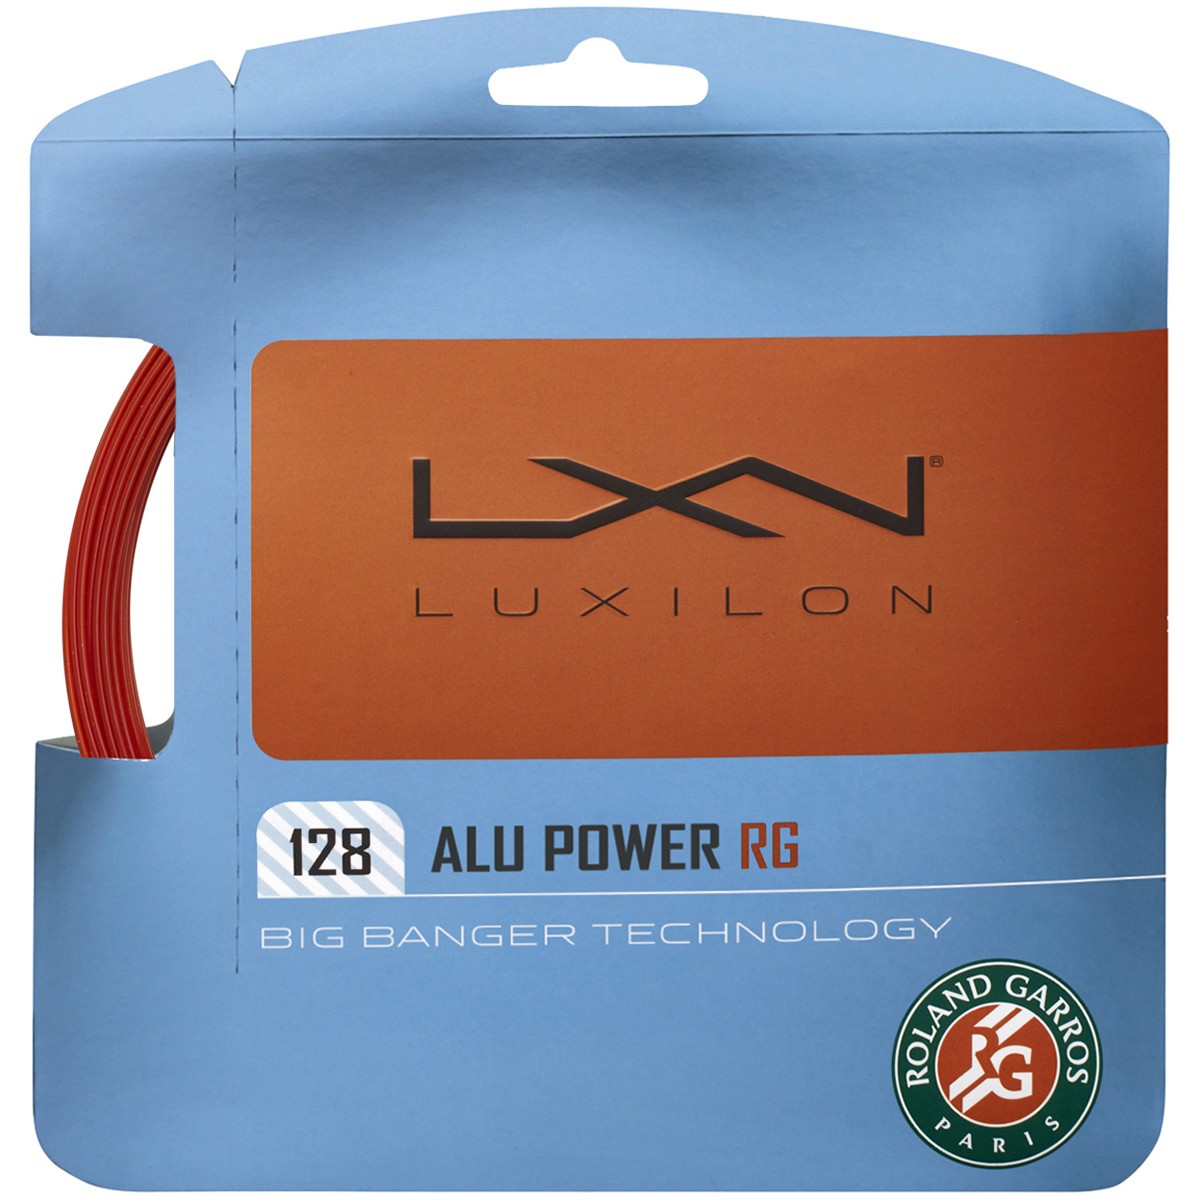 Luxilon Big Banger Alu Power ROLAND GARROS